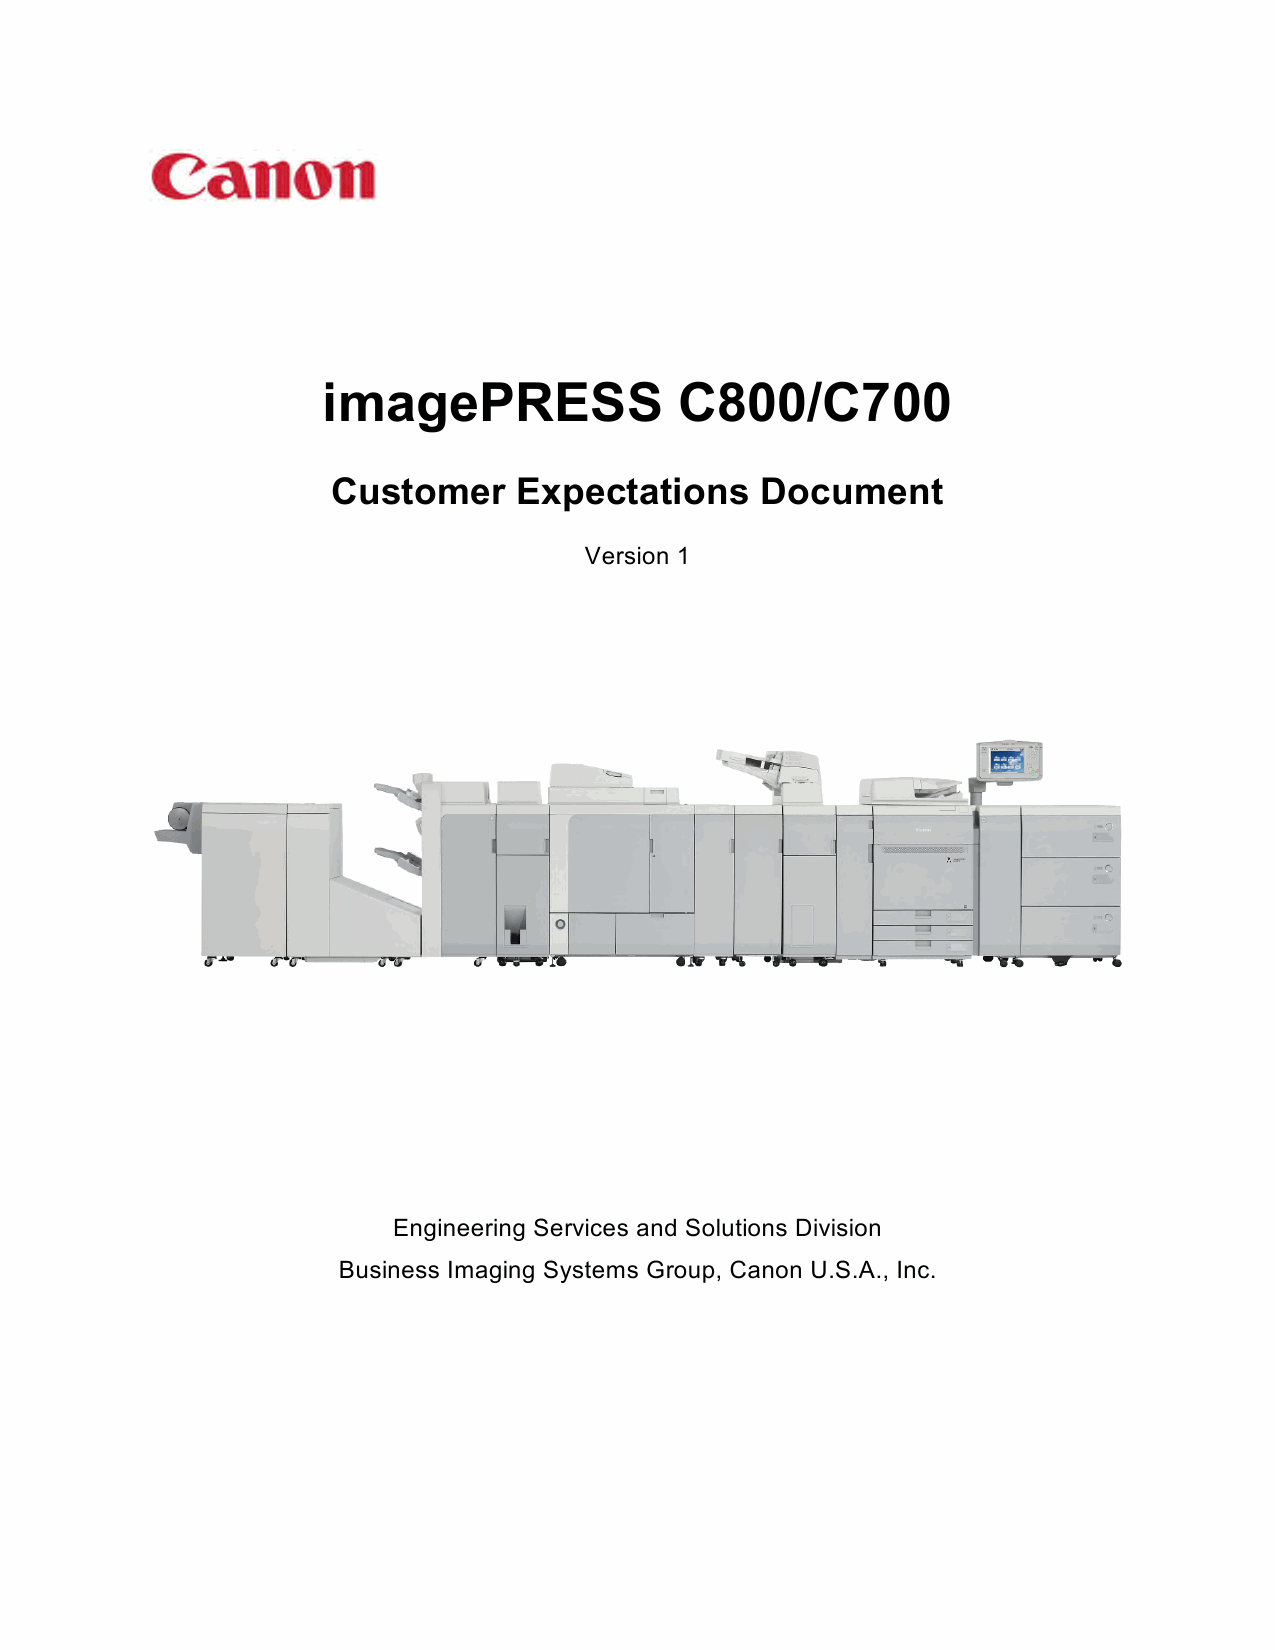 Canon imagePRESS C800 C700 Customer Expectations Document-1